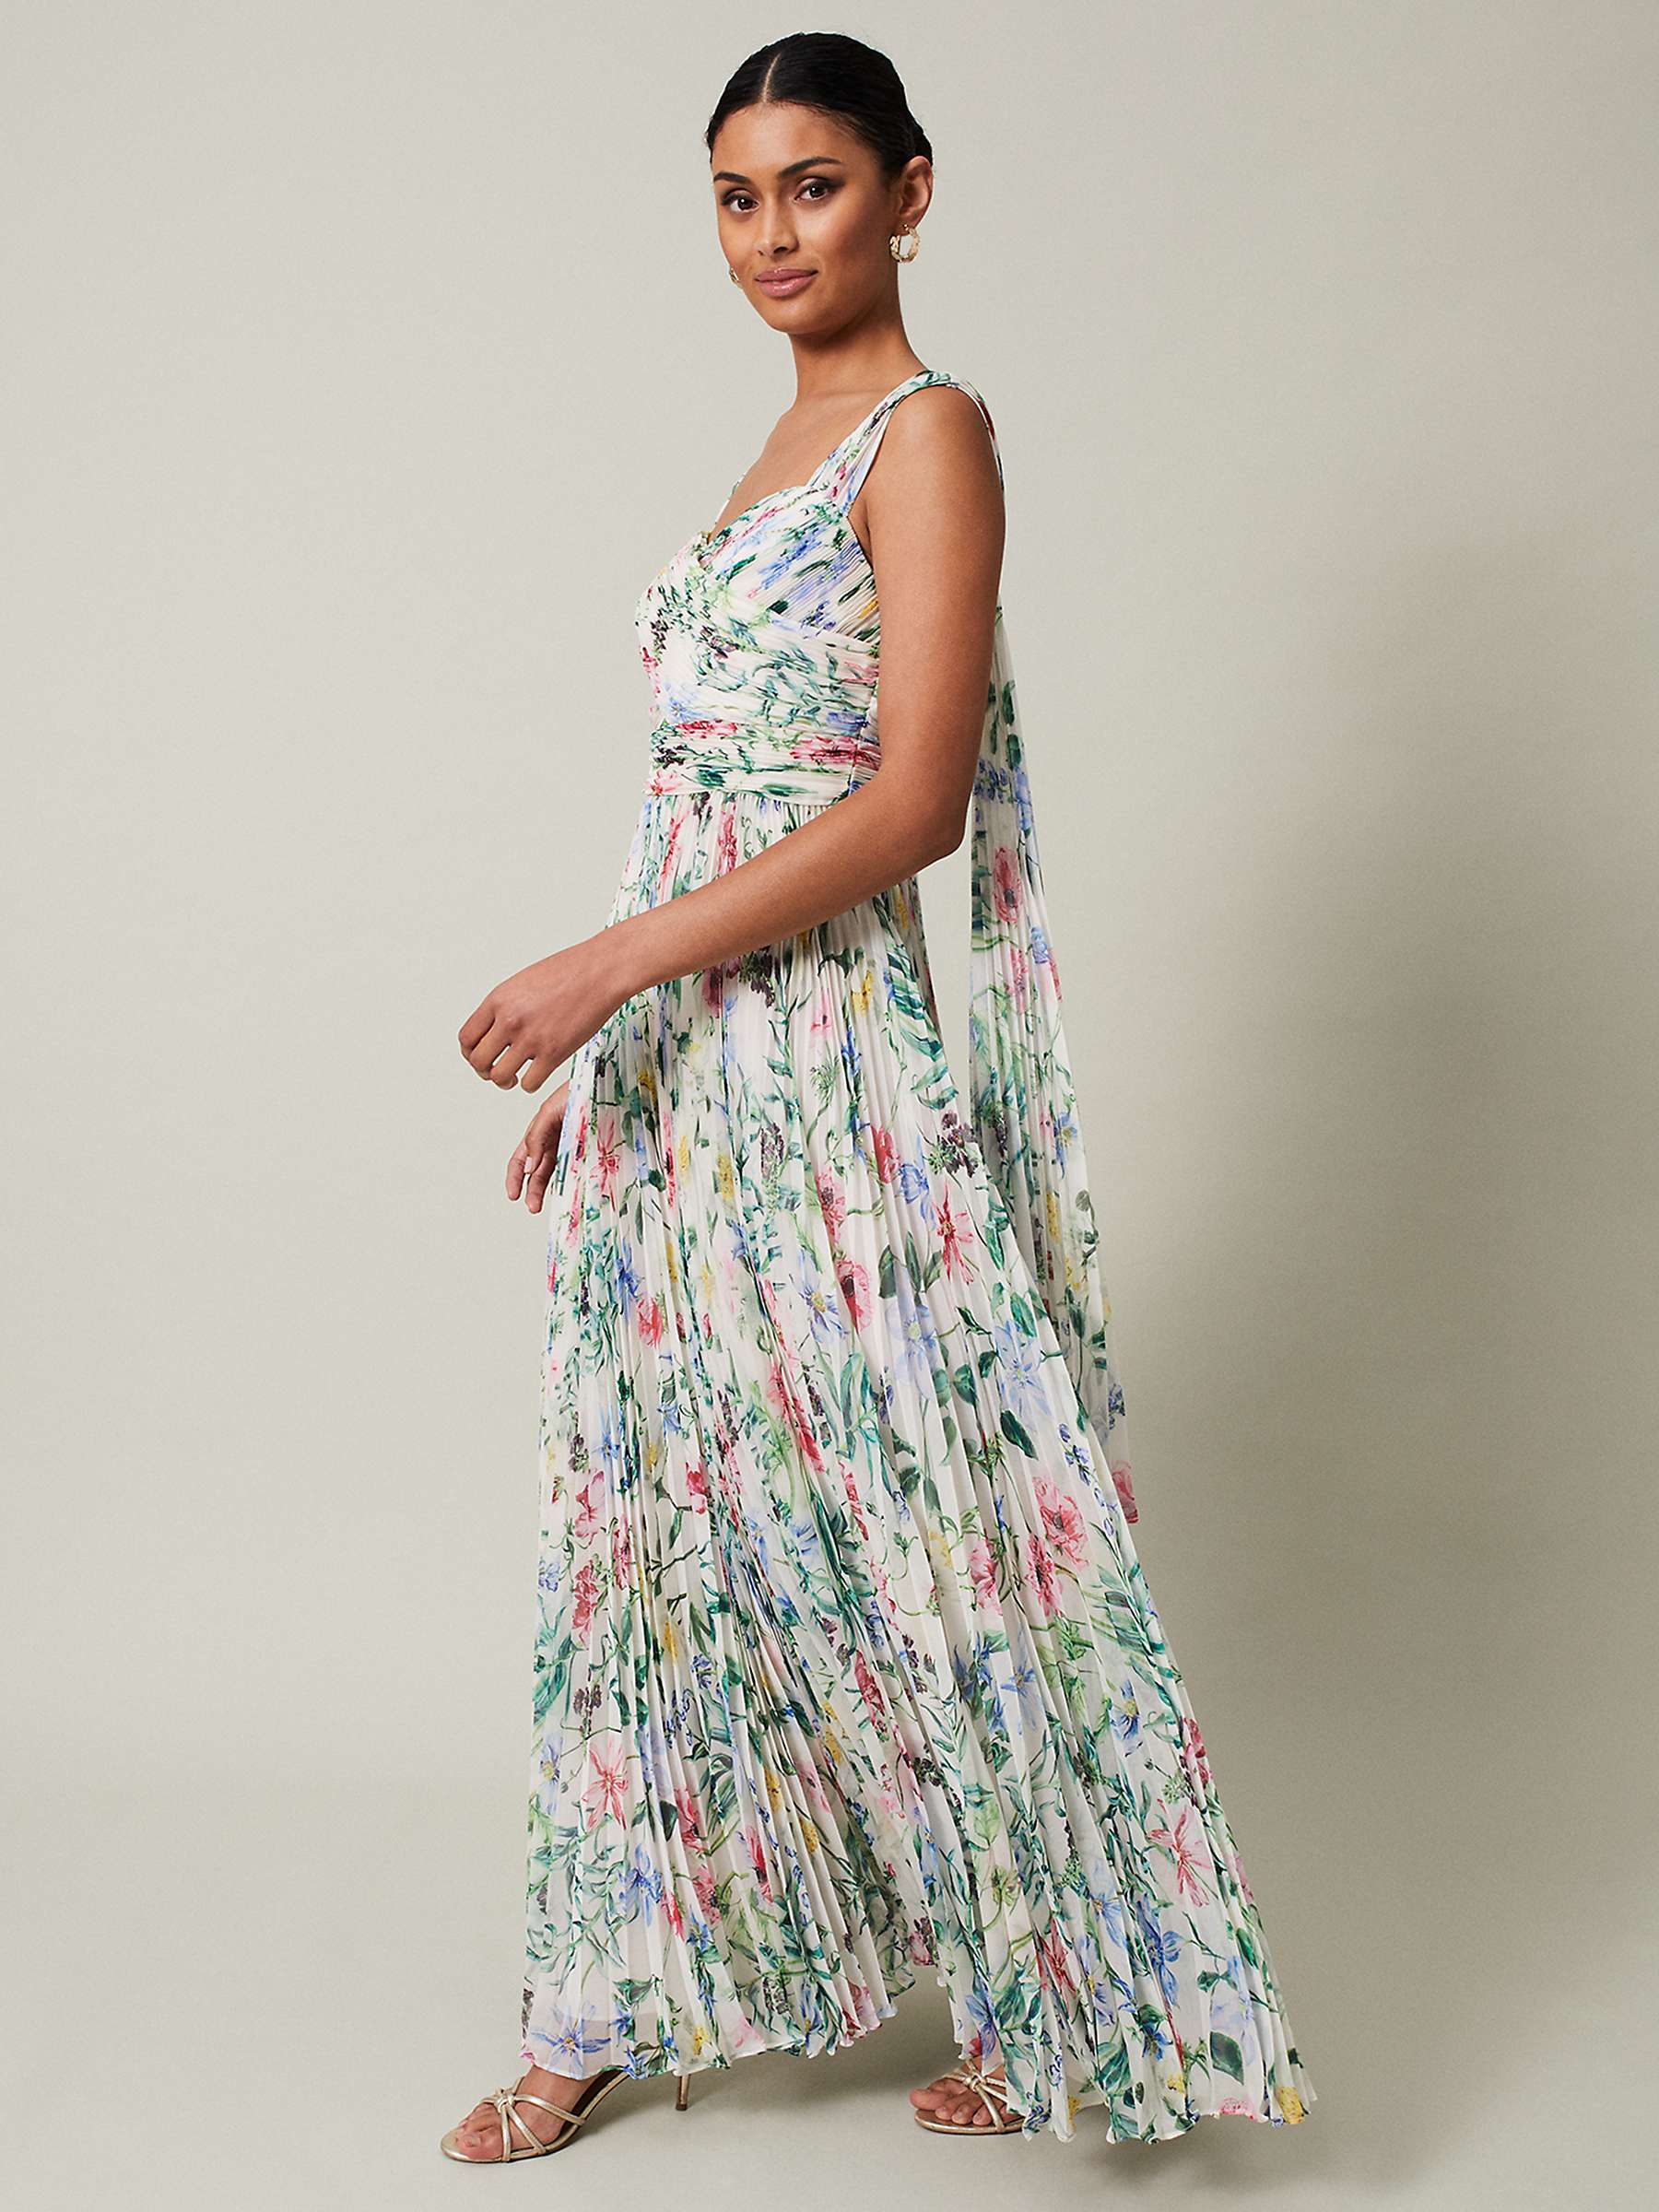 Exploring The Latest Fashion Trends: Floral Print Maxi Dresses